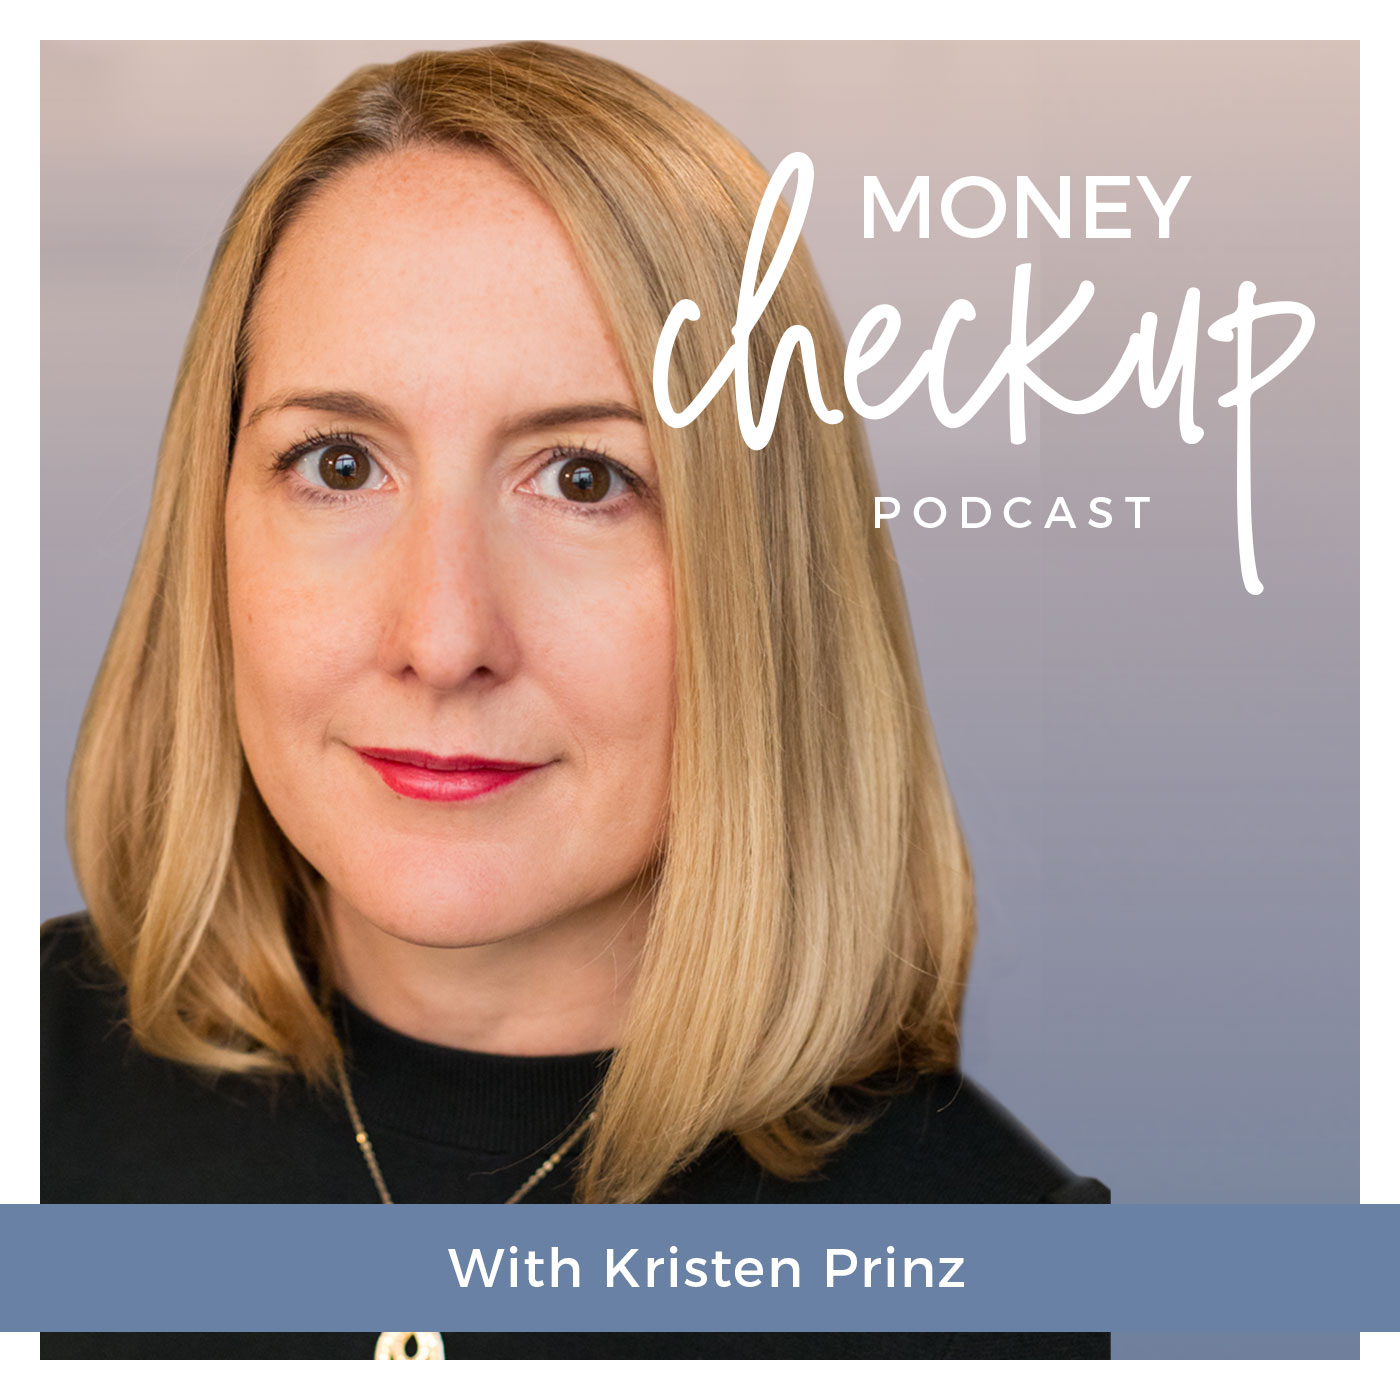 Money Checkup Podcast With Kristen Prinz